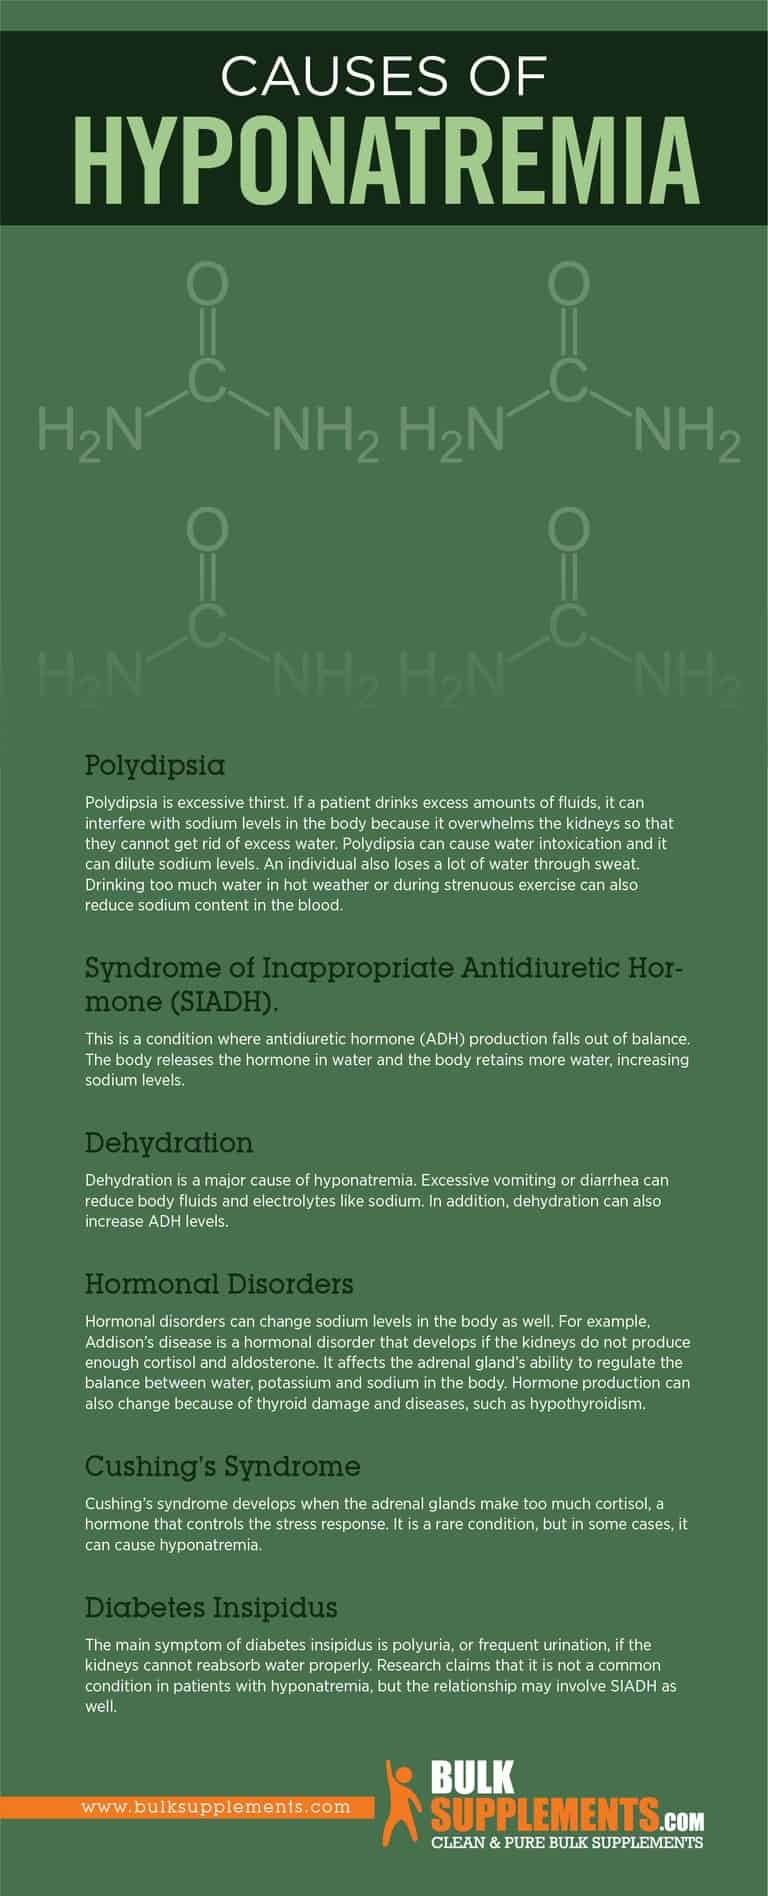 Hyponatremia: Causes, Symptoms & Treatment by James Denlinger